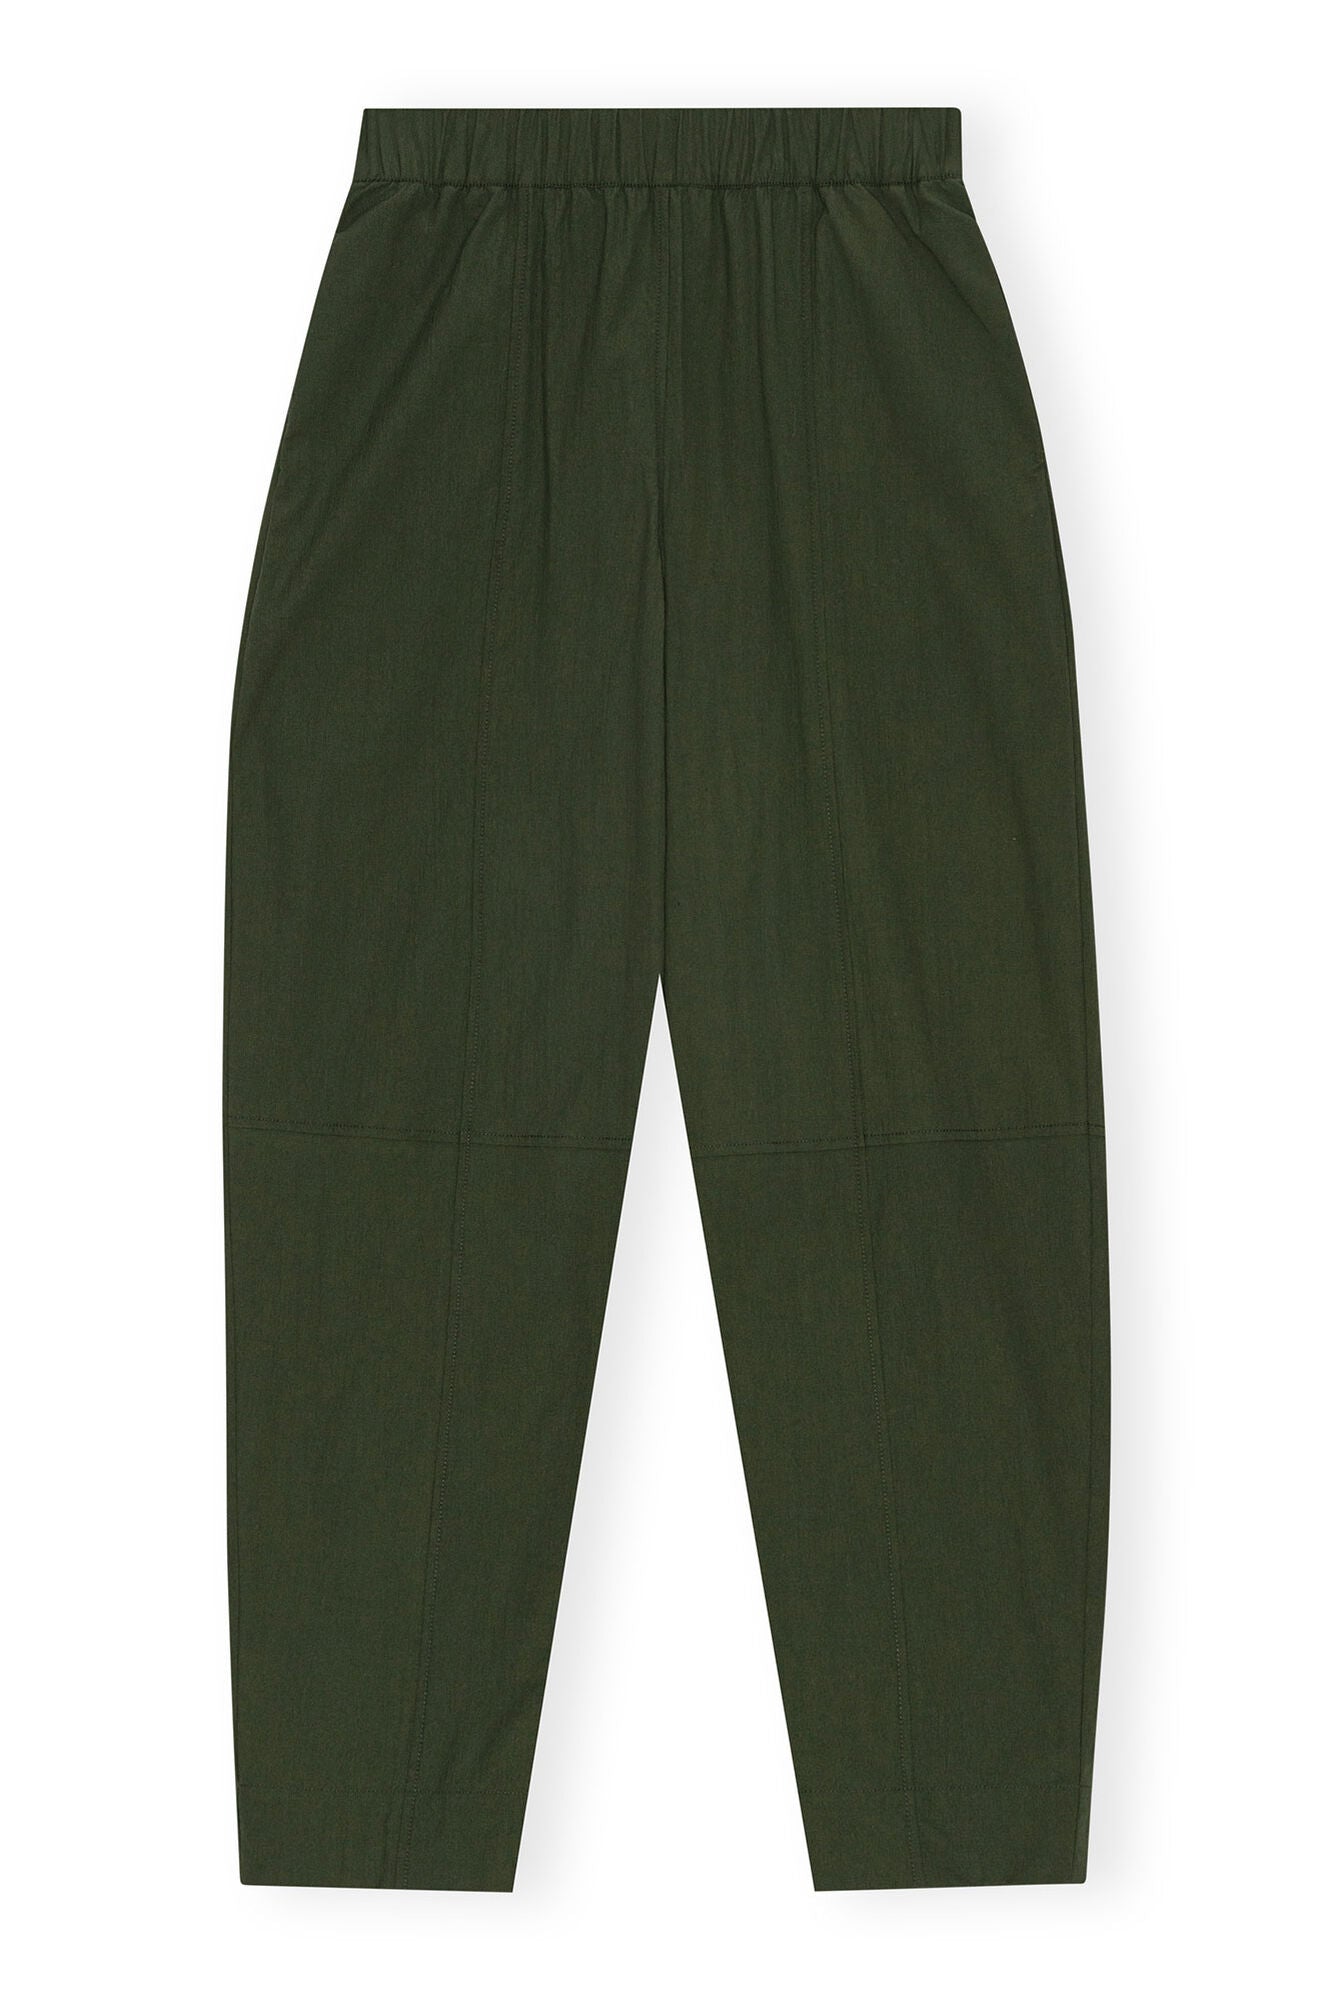 Cotton Crepe Elasticated Curve Pants - Kombu Green - GANNI - Danali - F8924